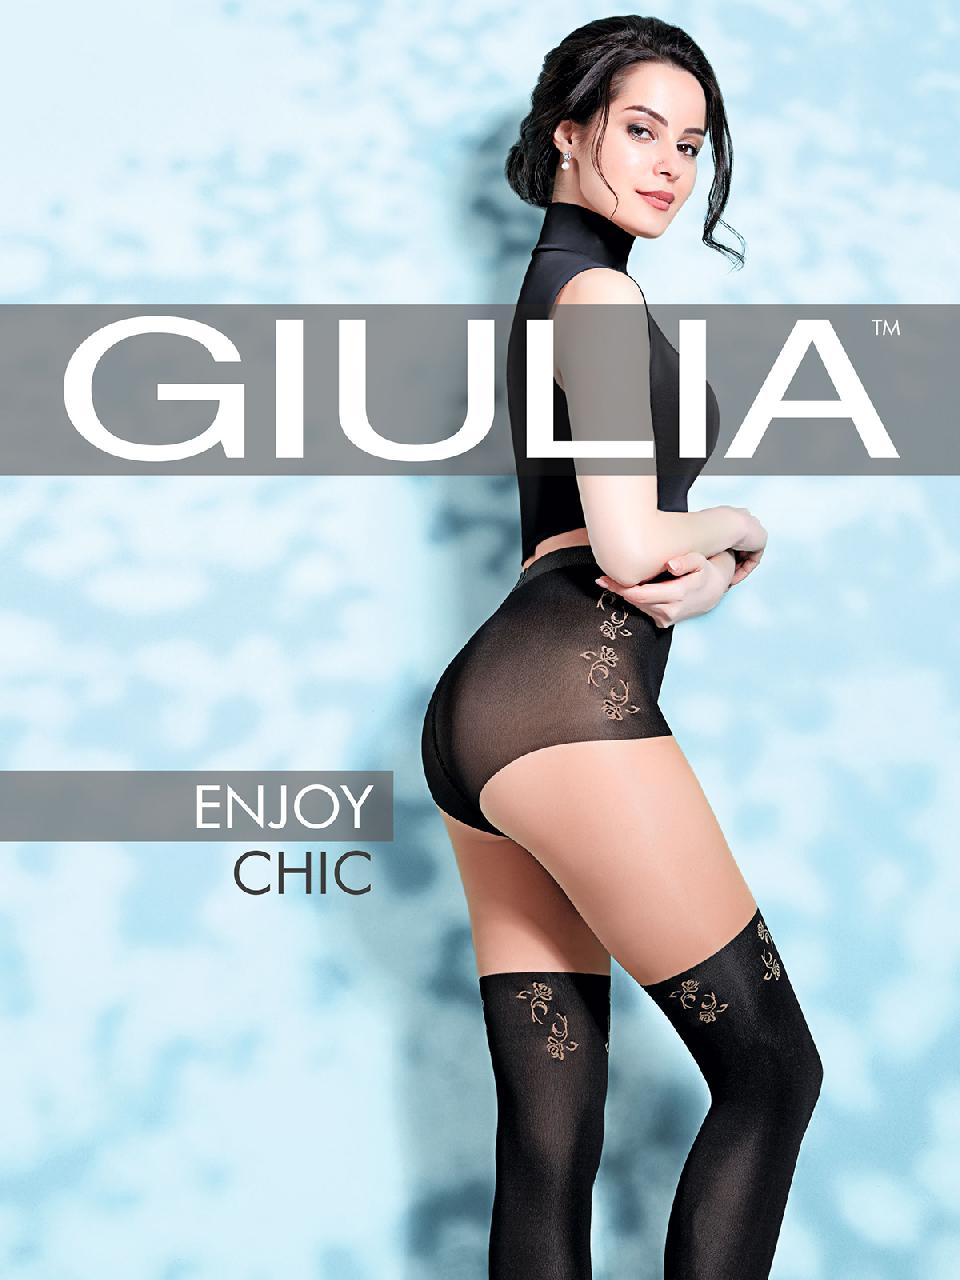 Giulia Enjoy Chic 04 nero 2